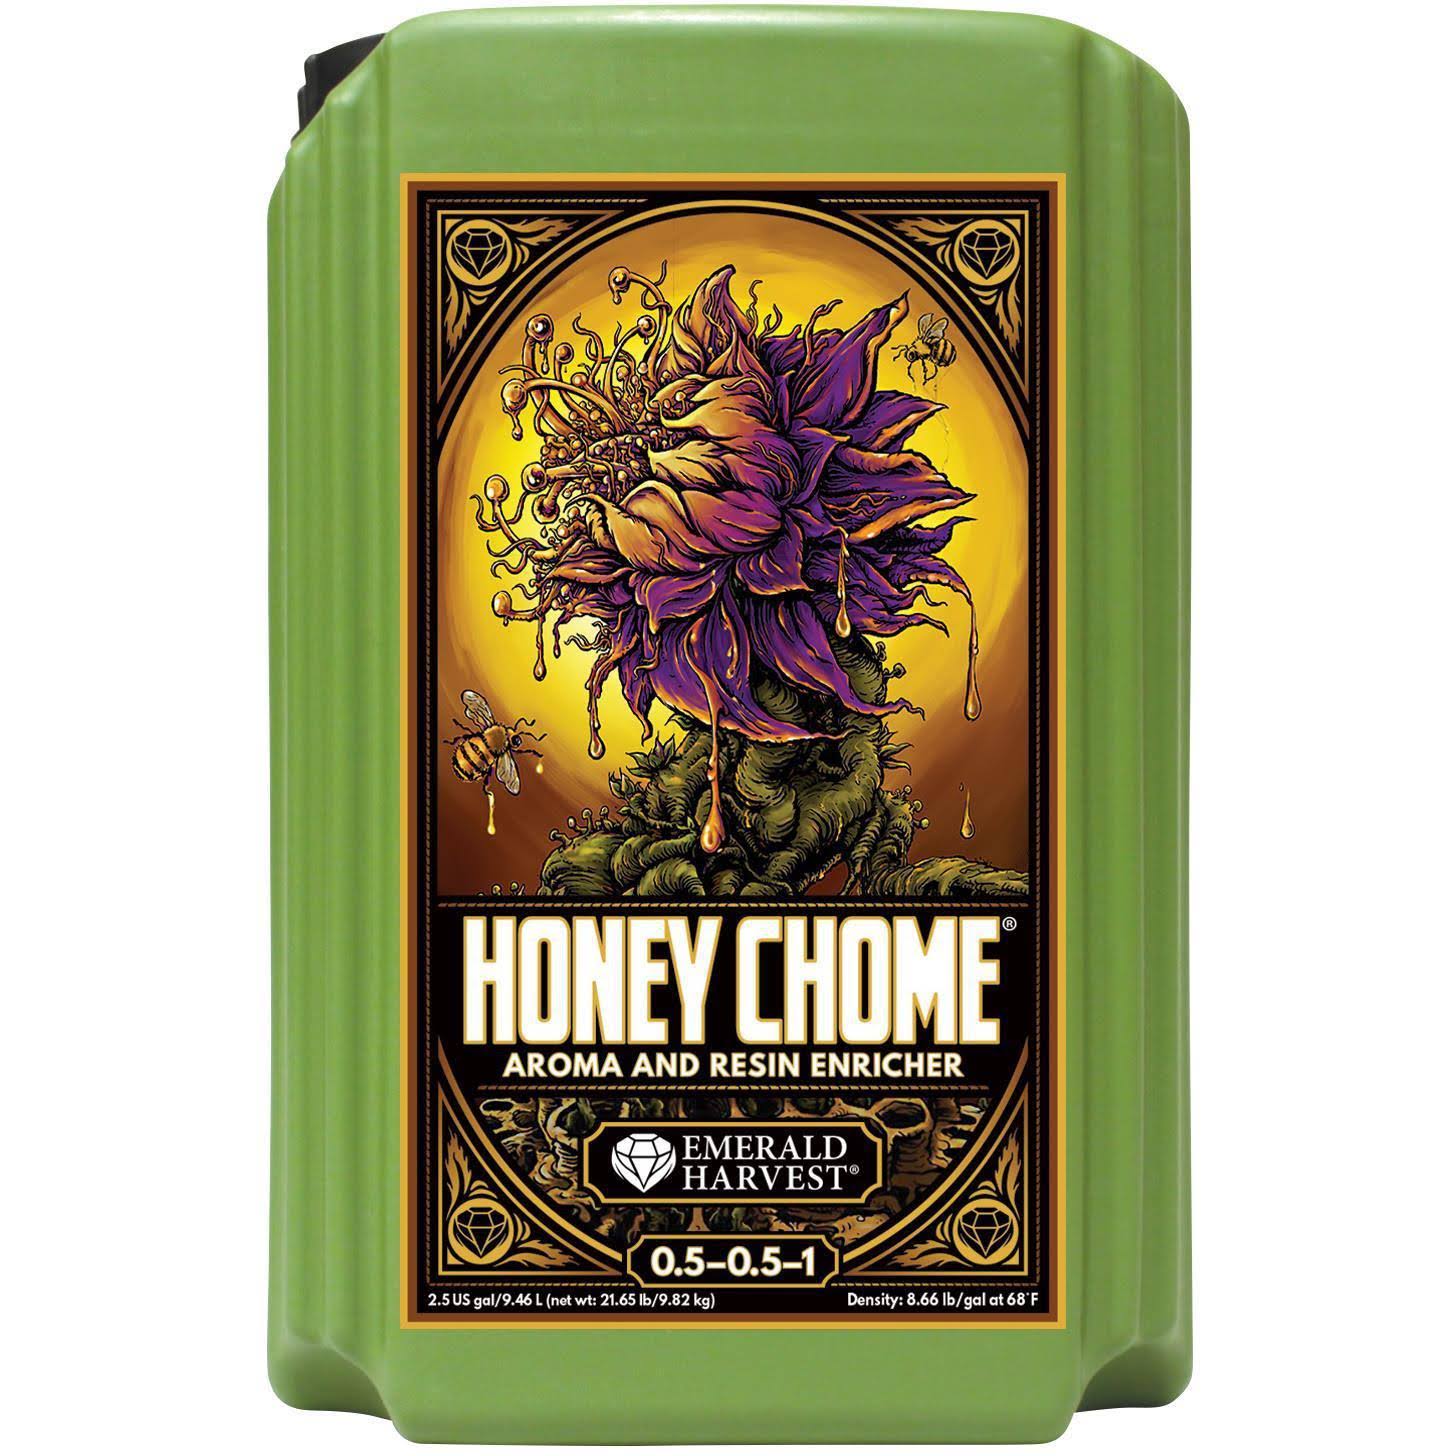 Emerald Harvest Honey Chrome - 9.46l